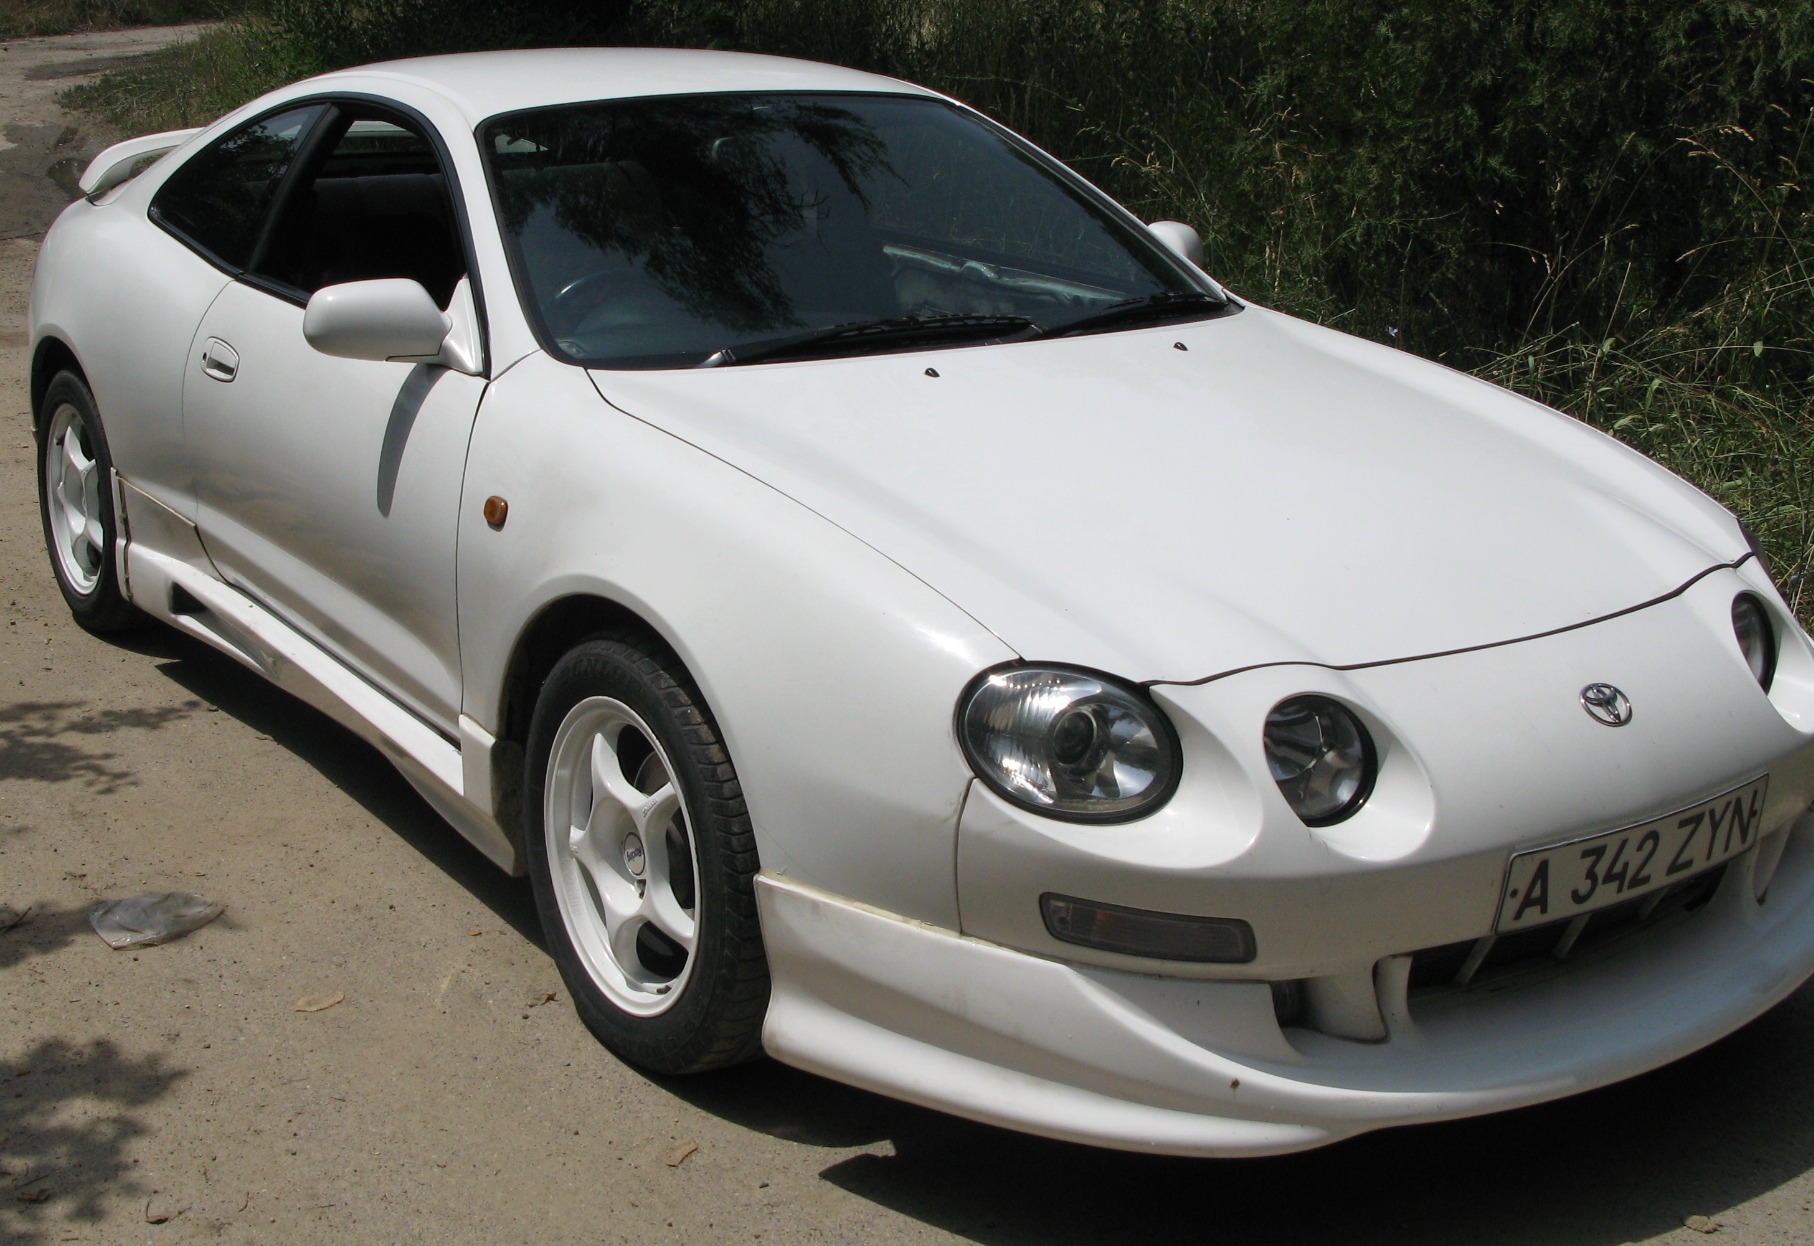   I Toyota Celica 20 1998